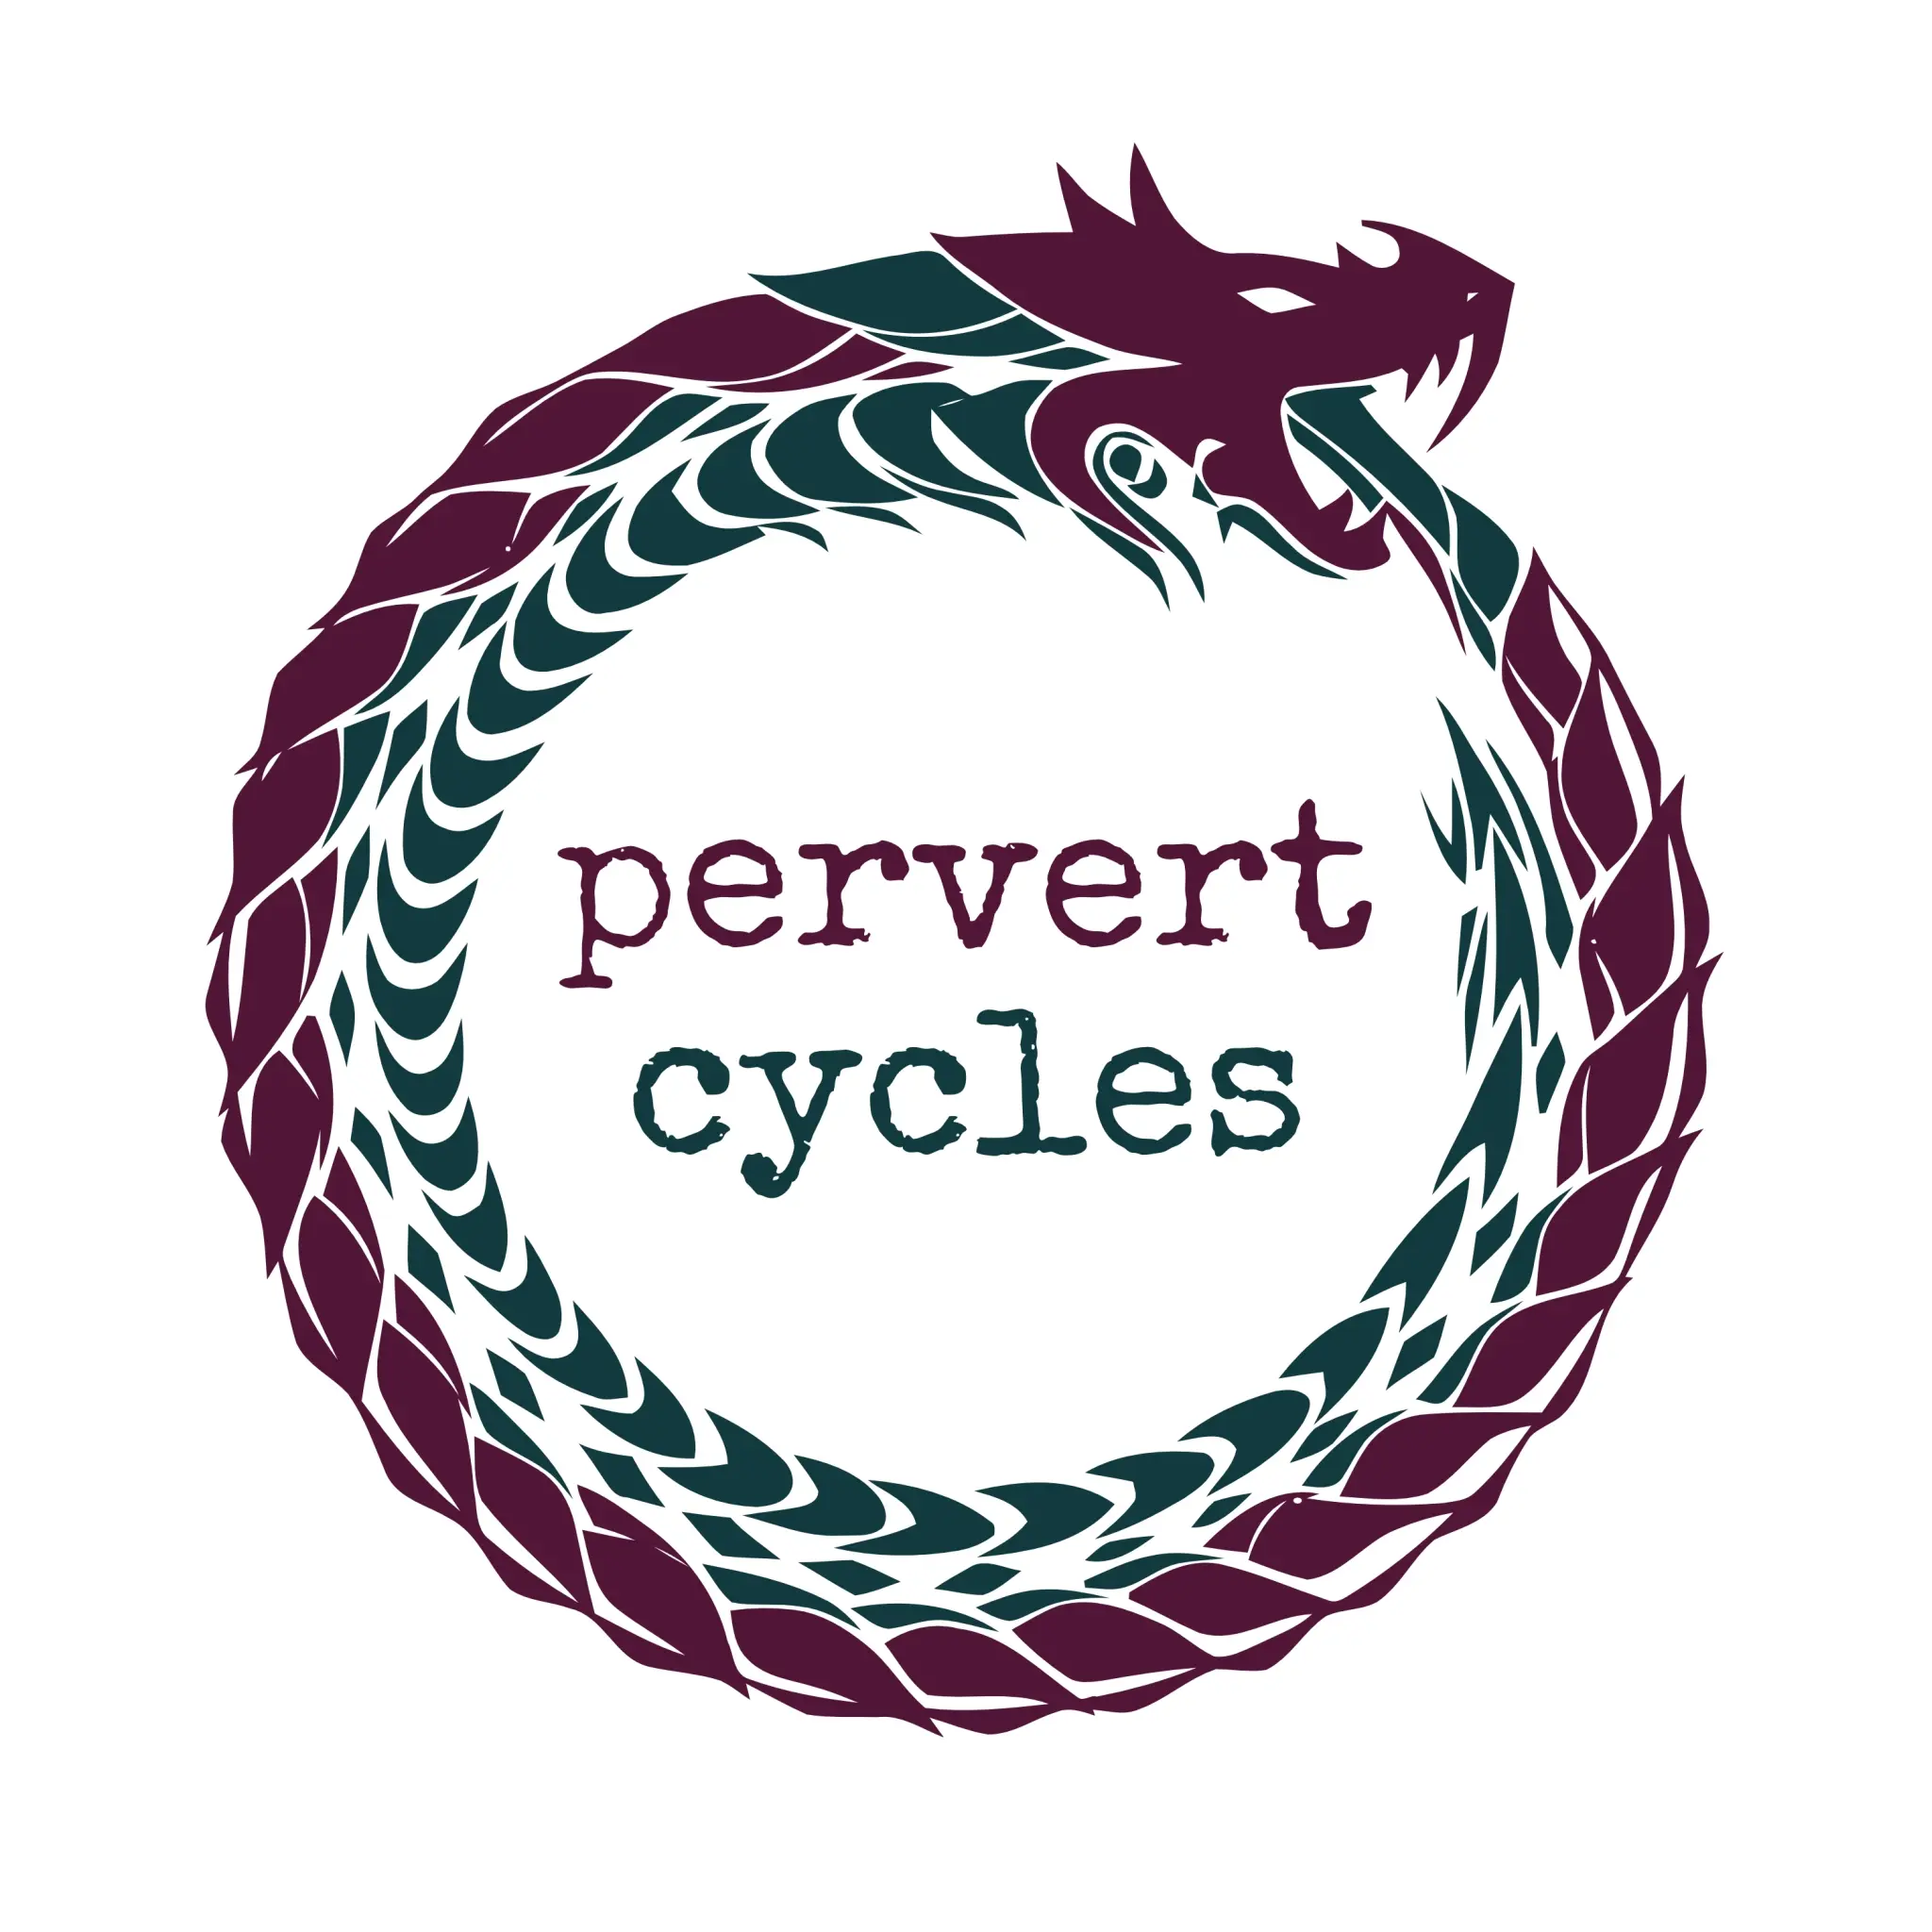 We like: pervert:cycles